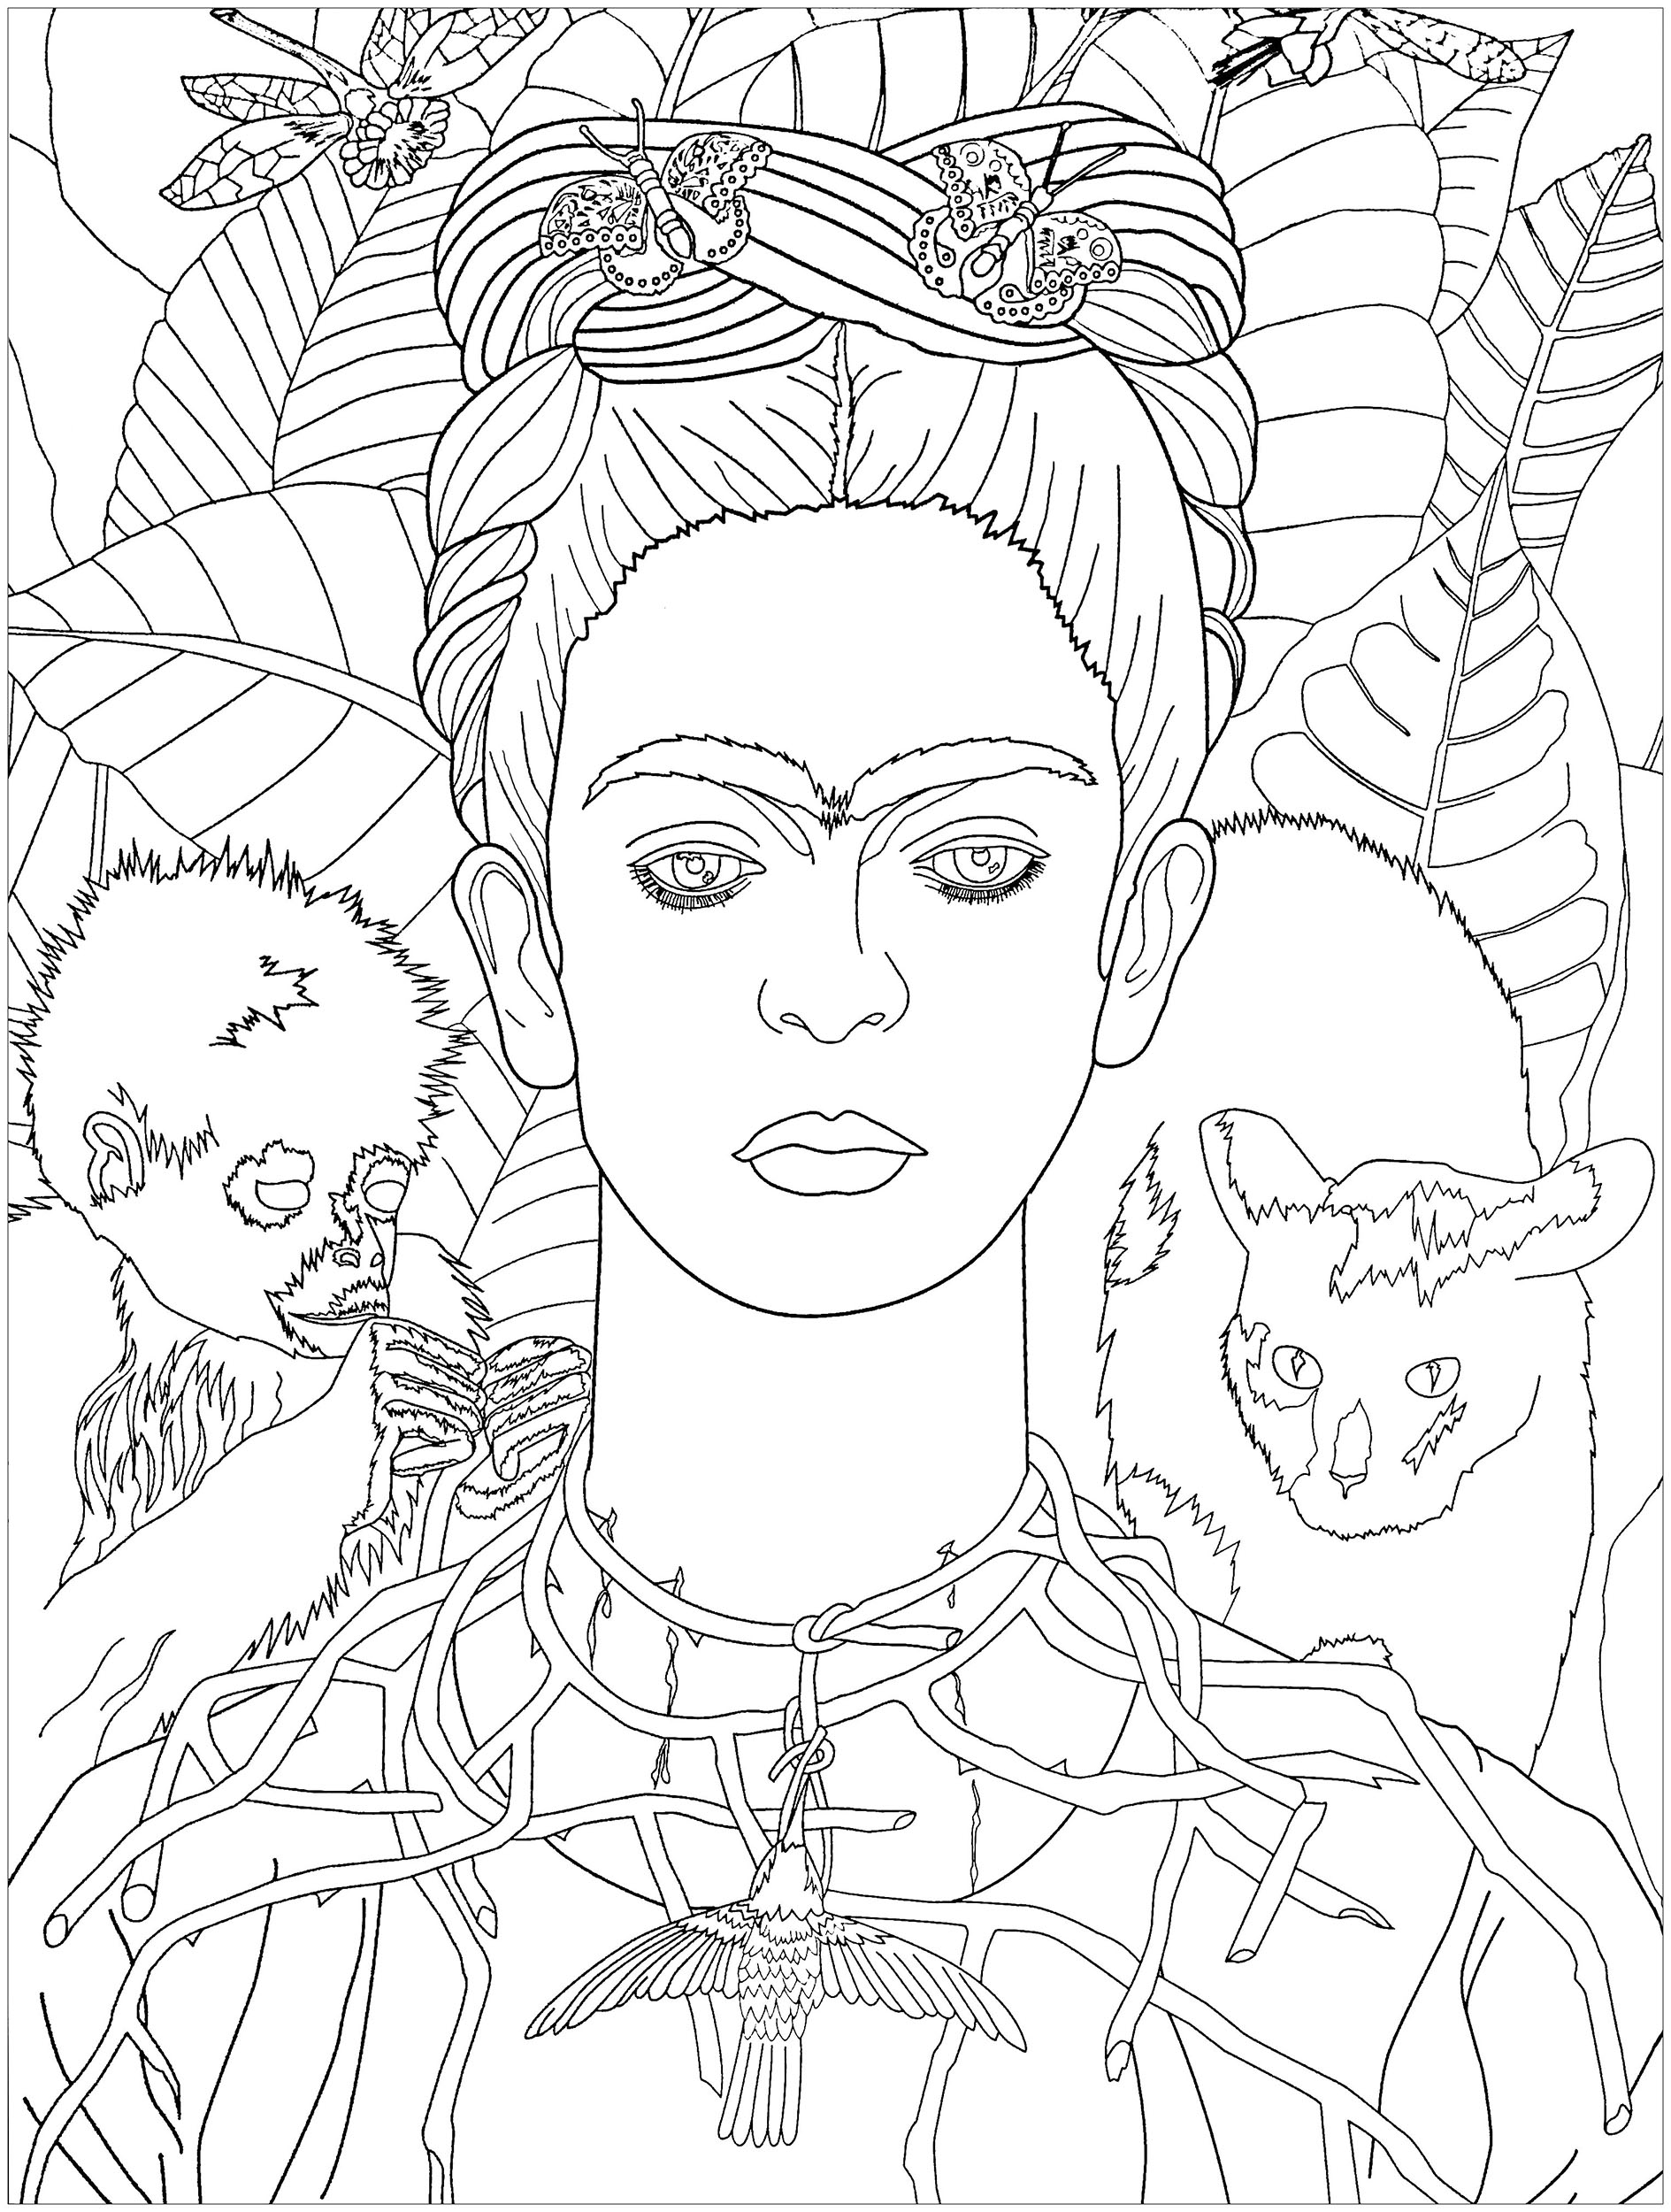 Frida Khalo - Autorretrato